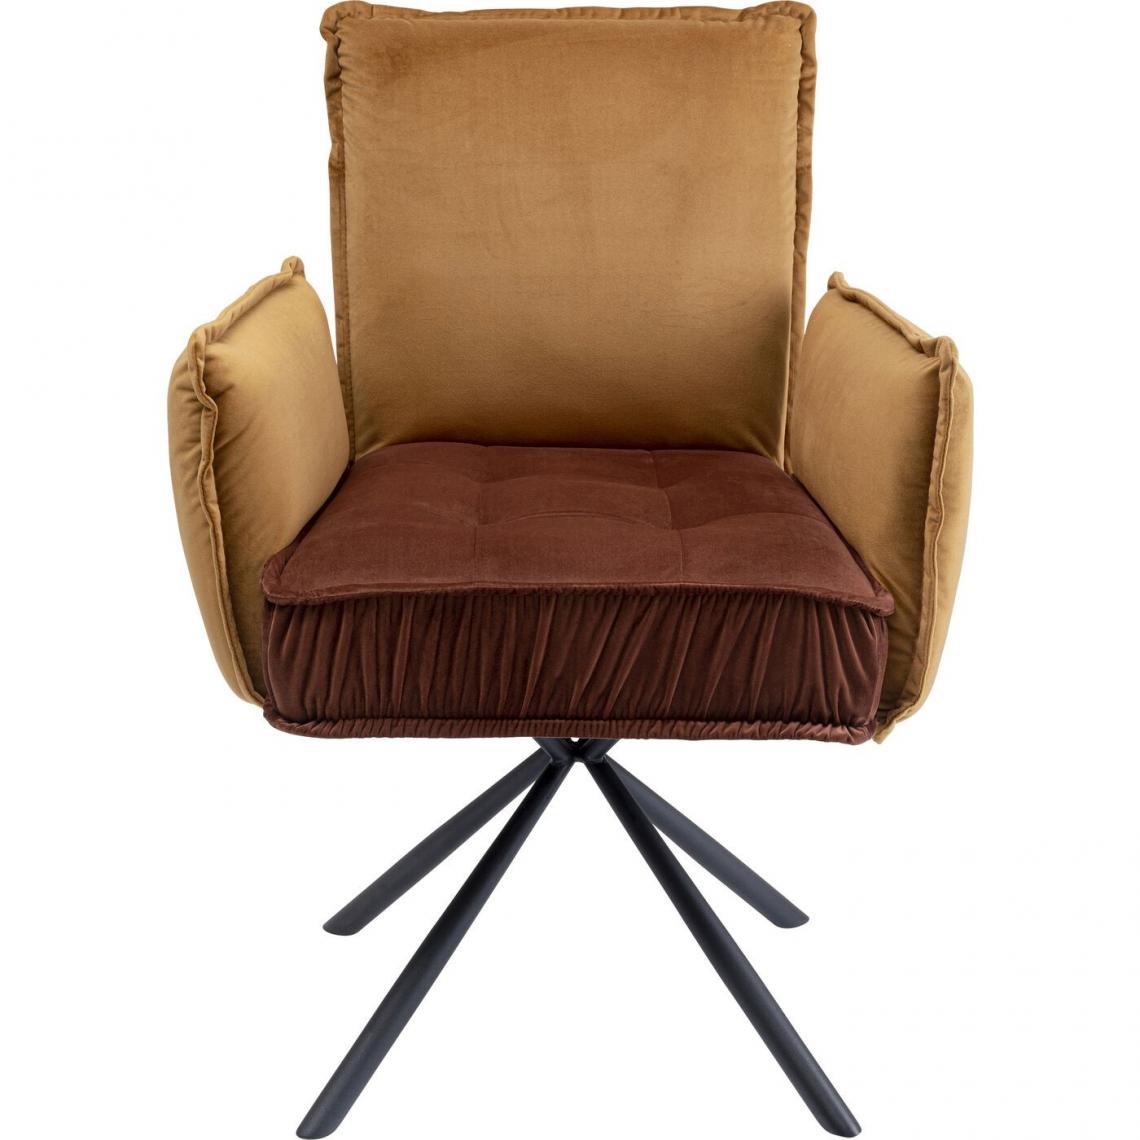 Karedesign - Chaise avec accoudoirs Chelsea marron Kare Design - Chaises